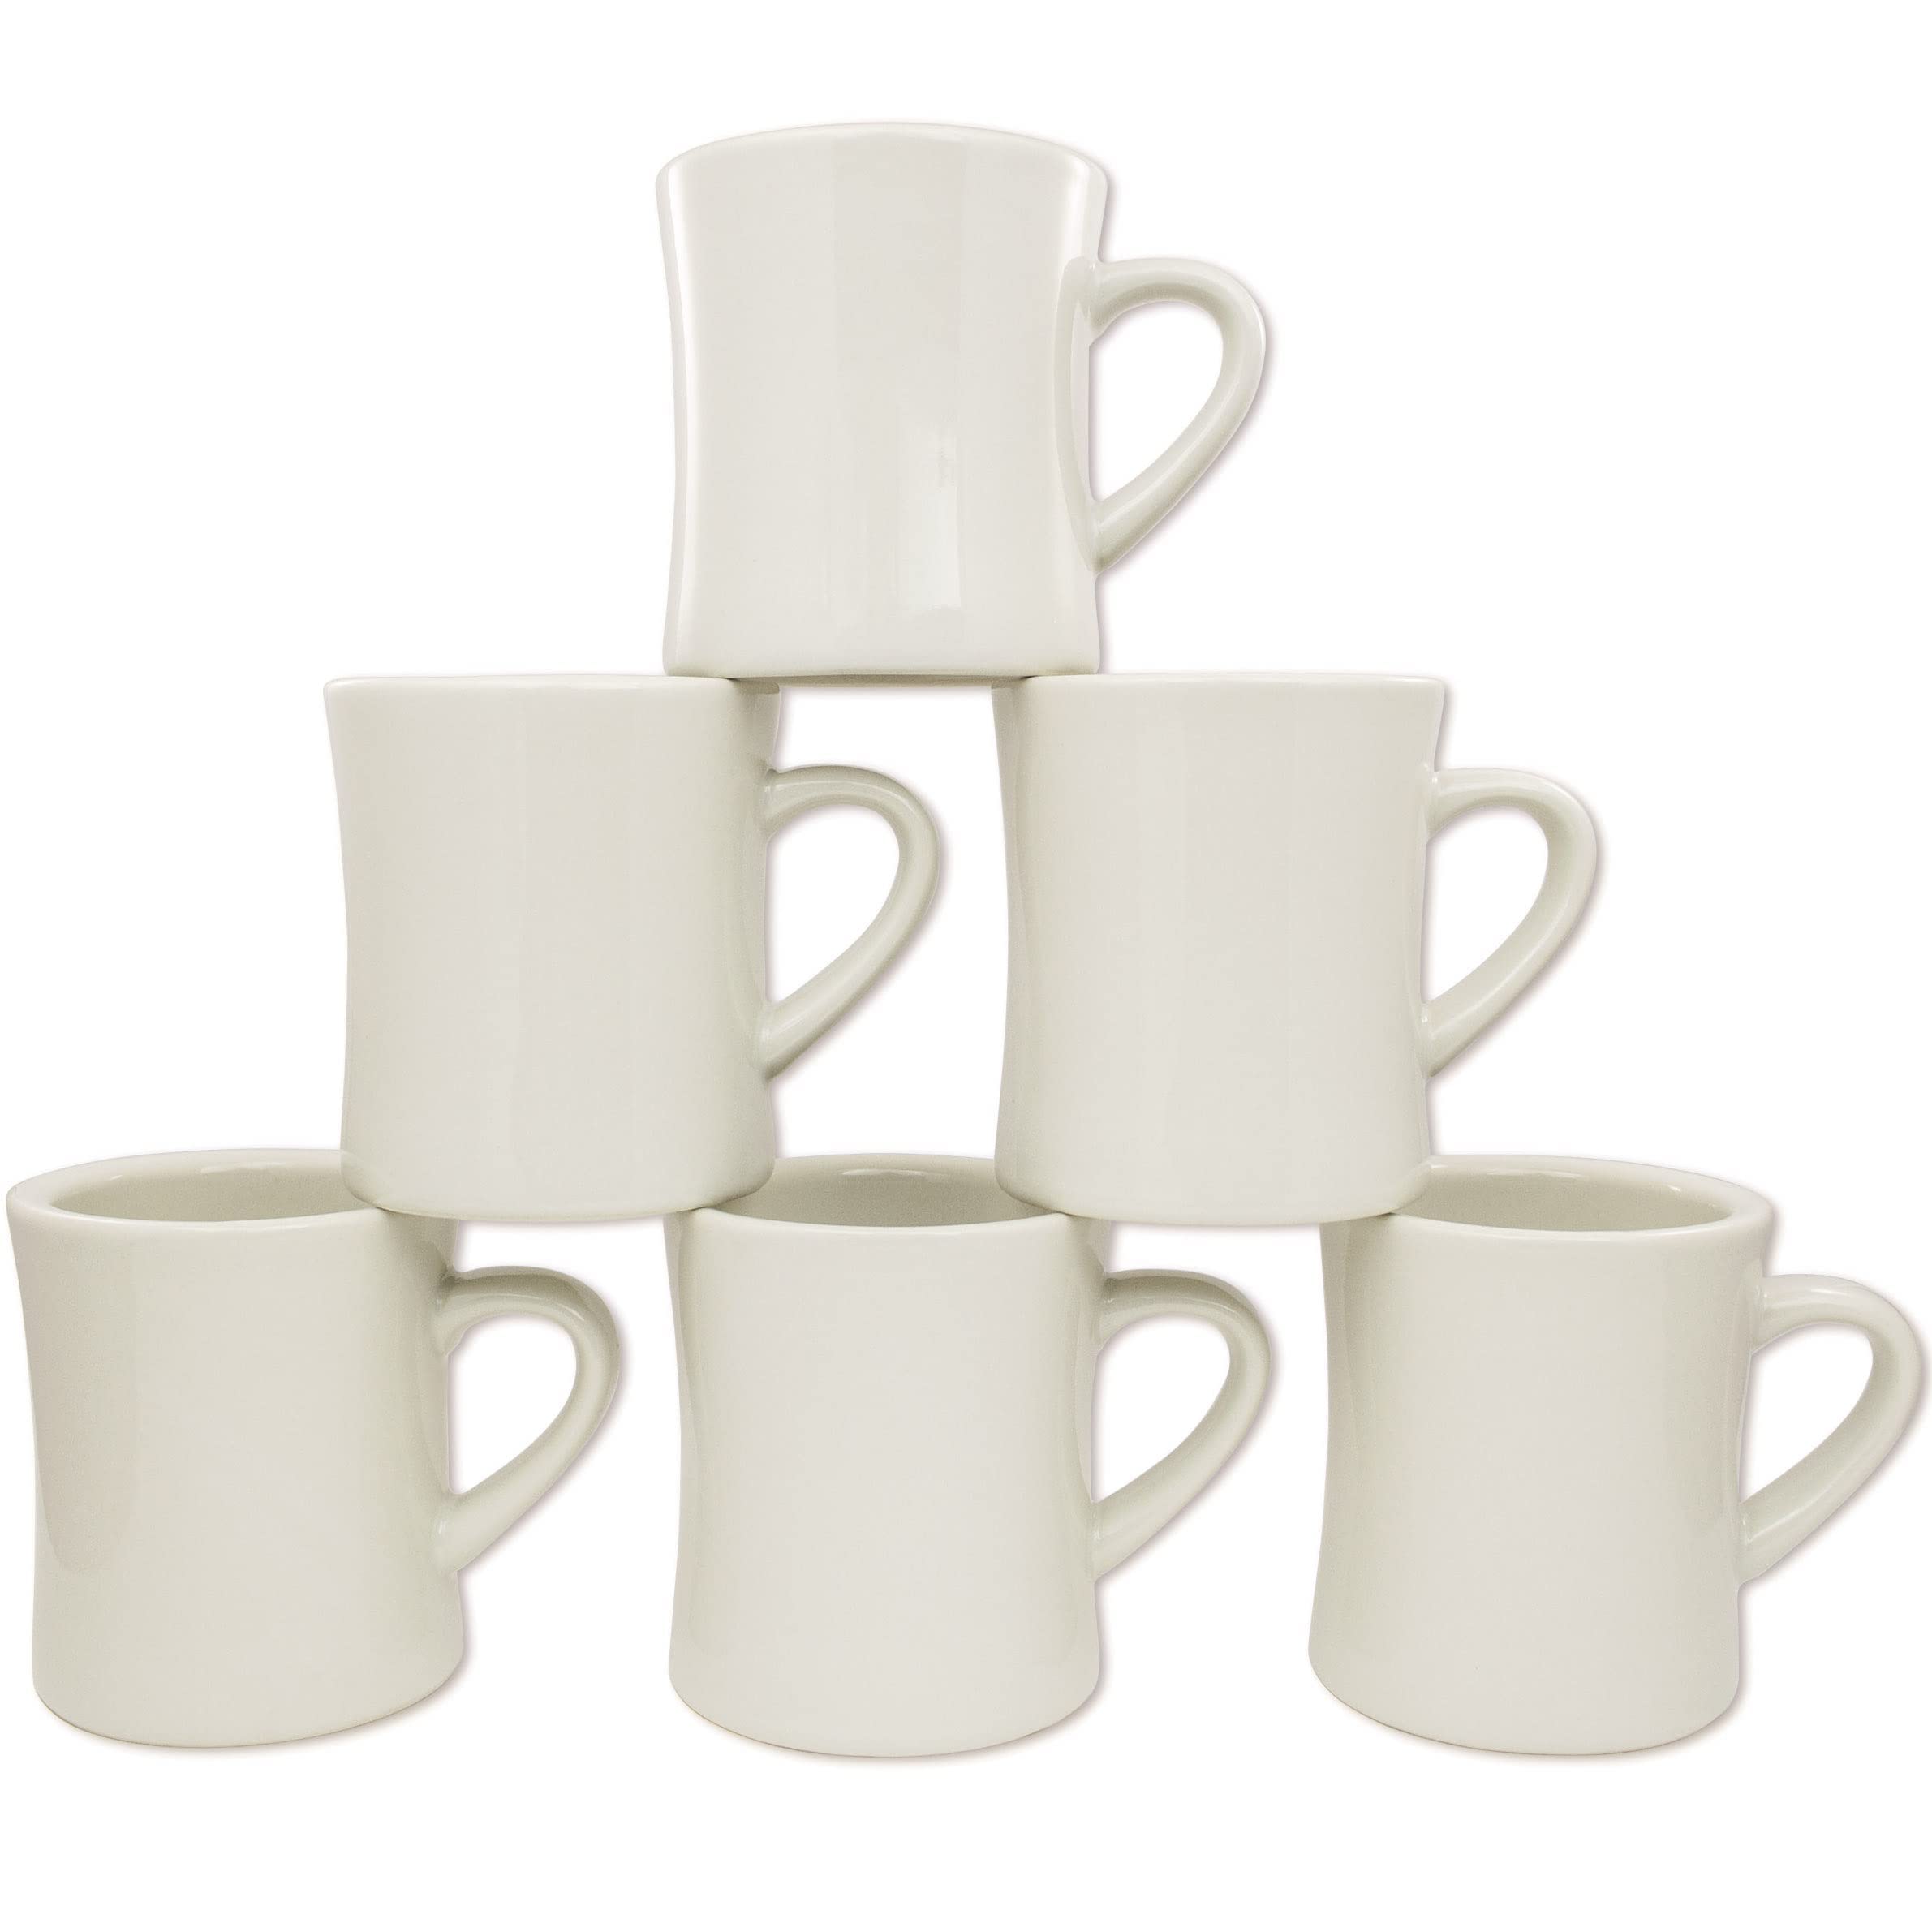 COLETTI Diner Coffee Mugs Set of 6